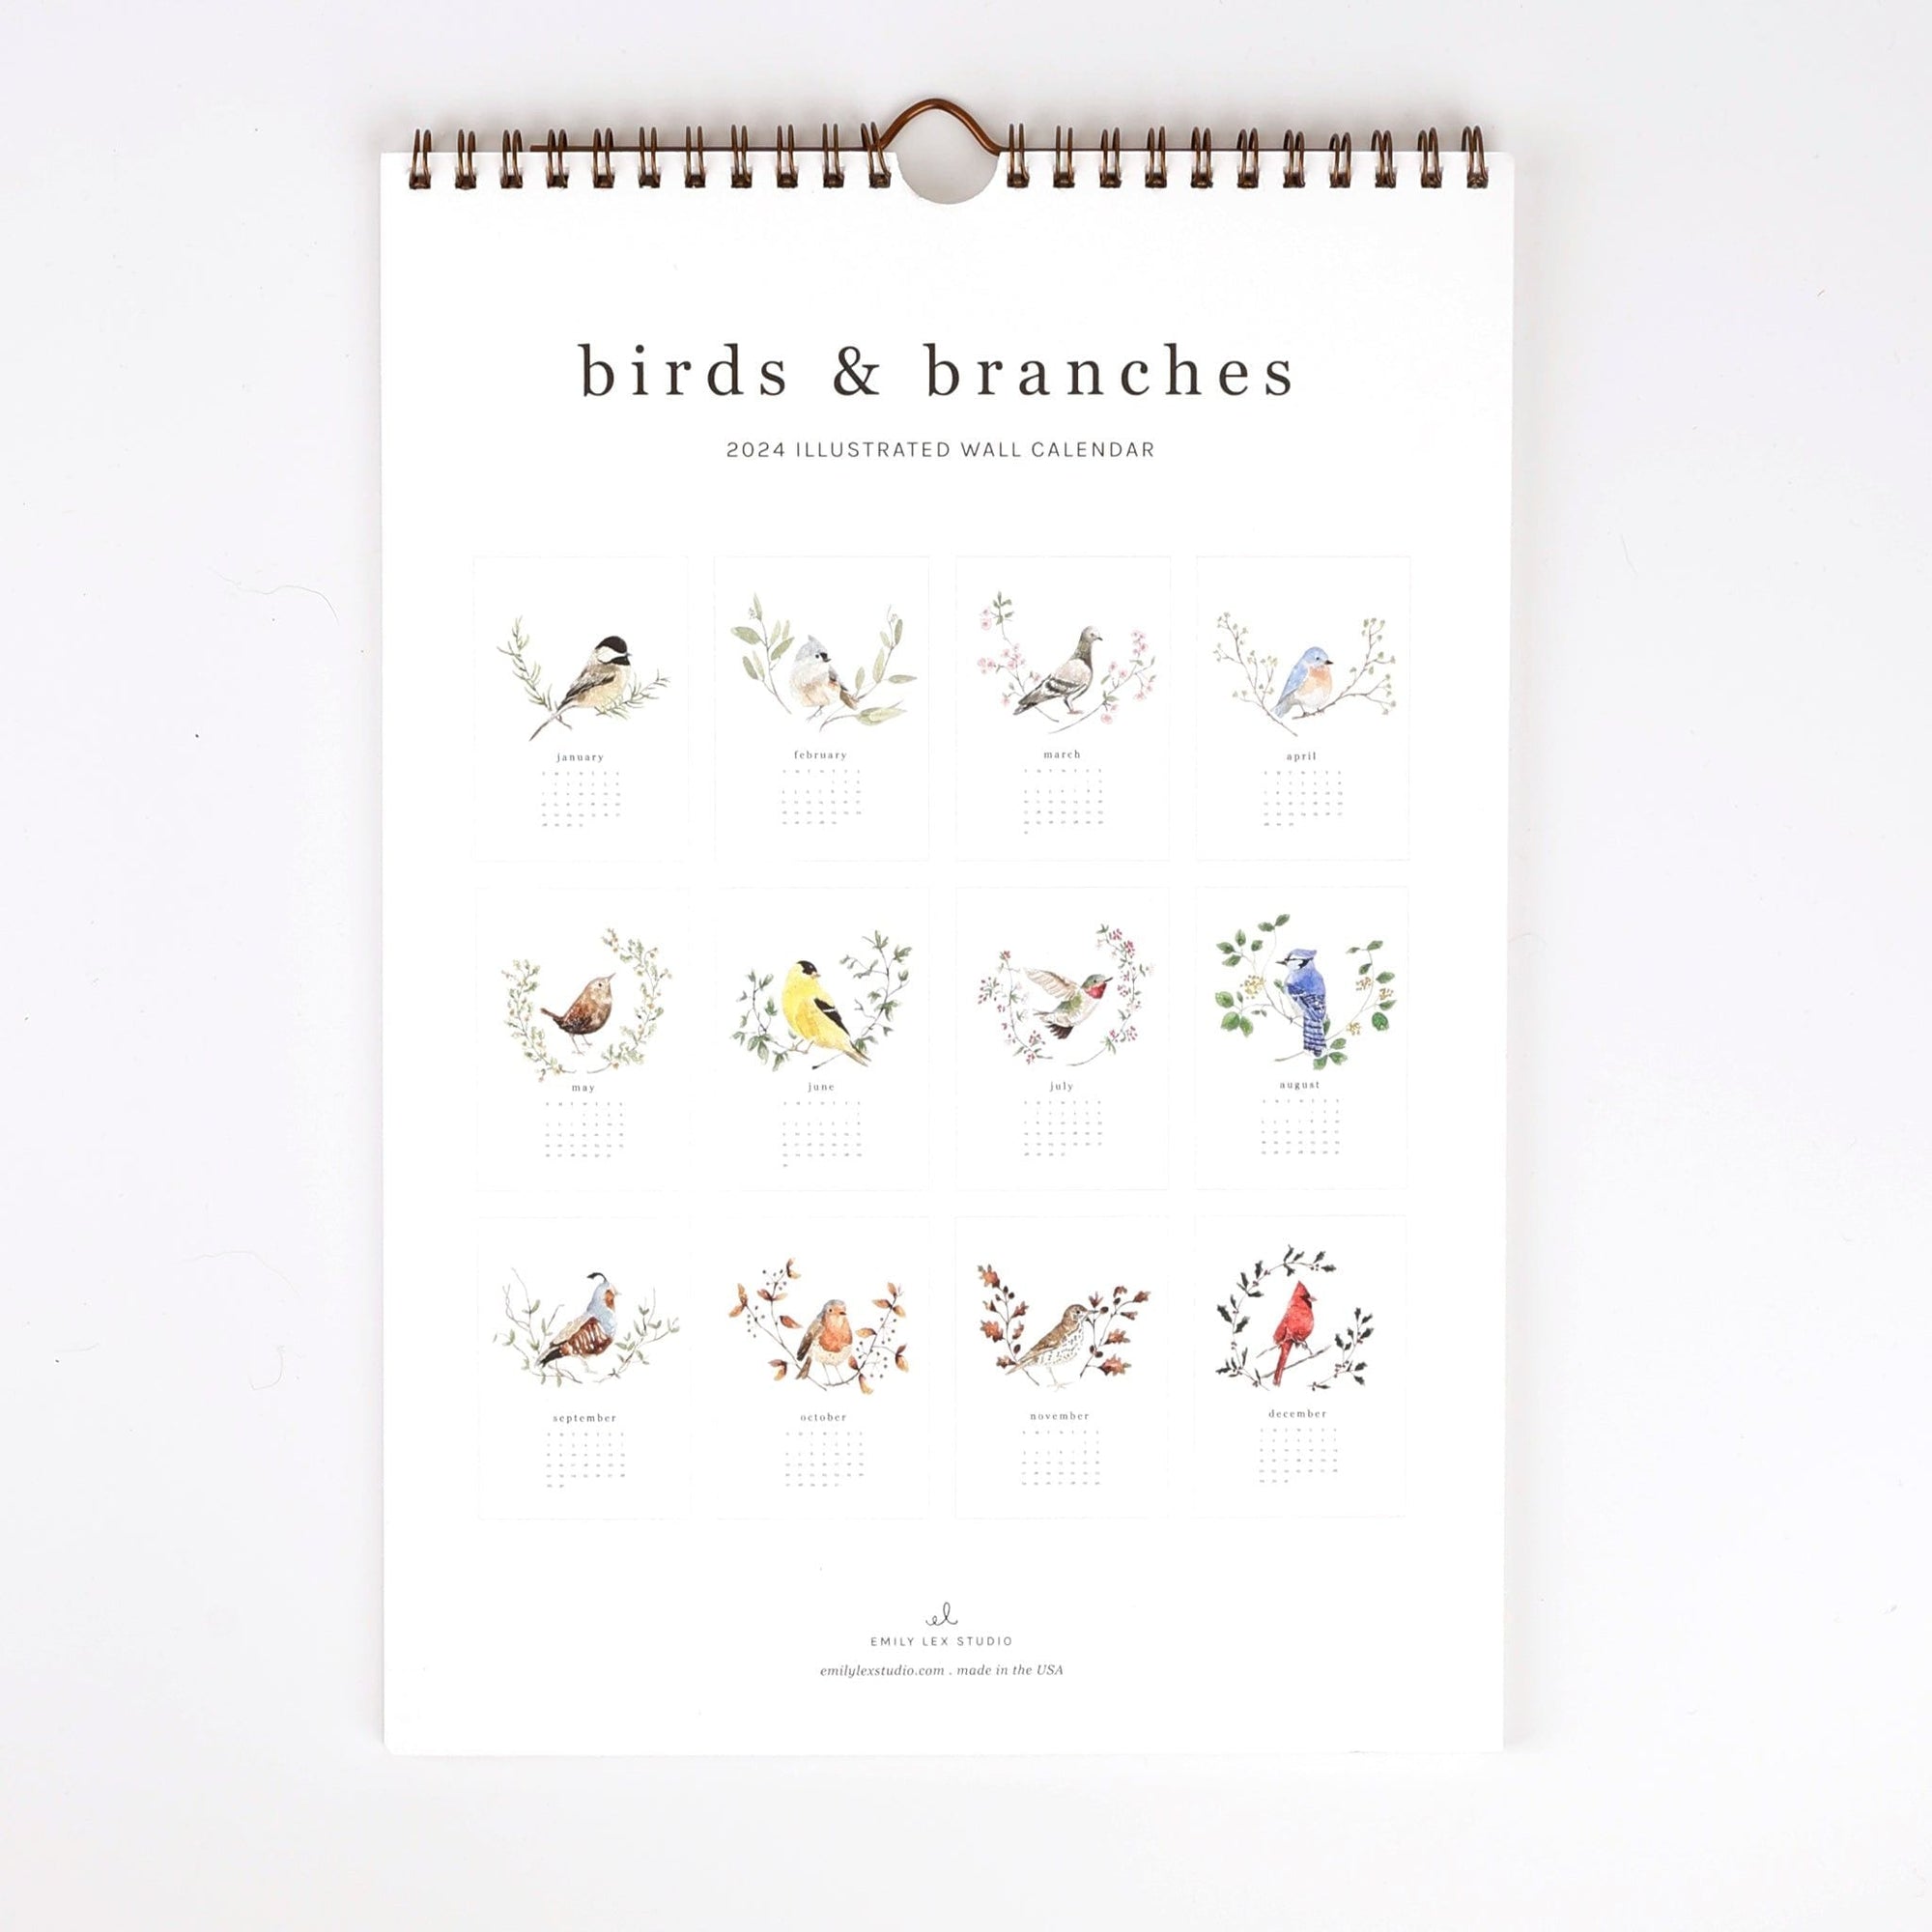 2024 birds & branches wall calendar - emily lex studio